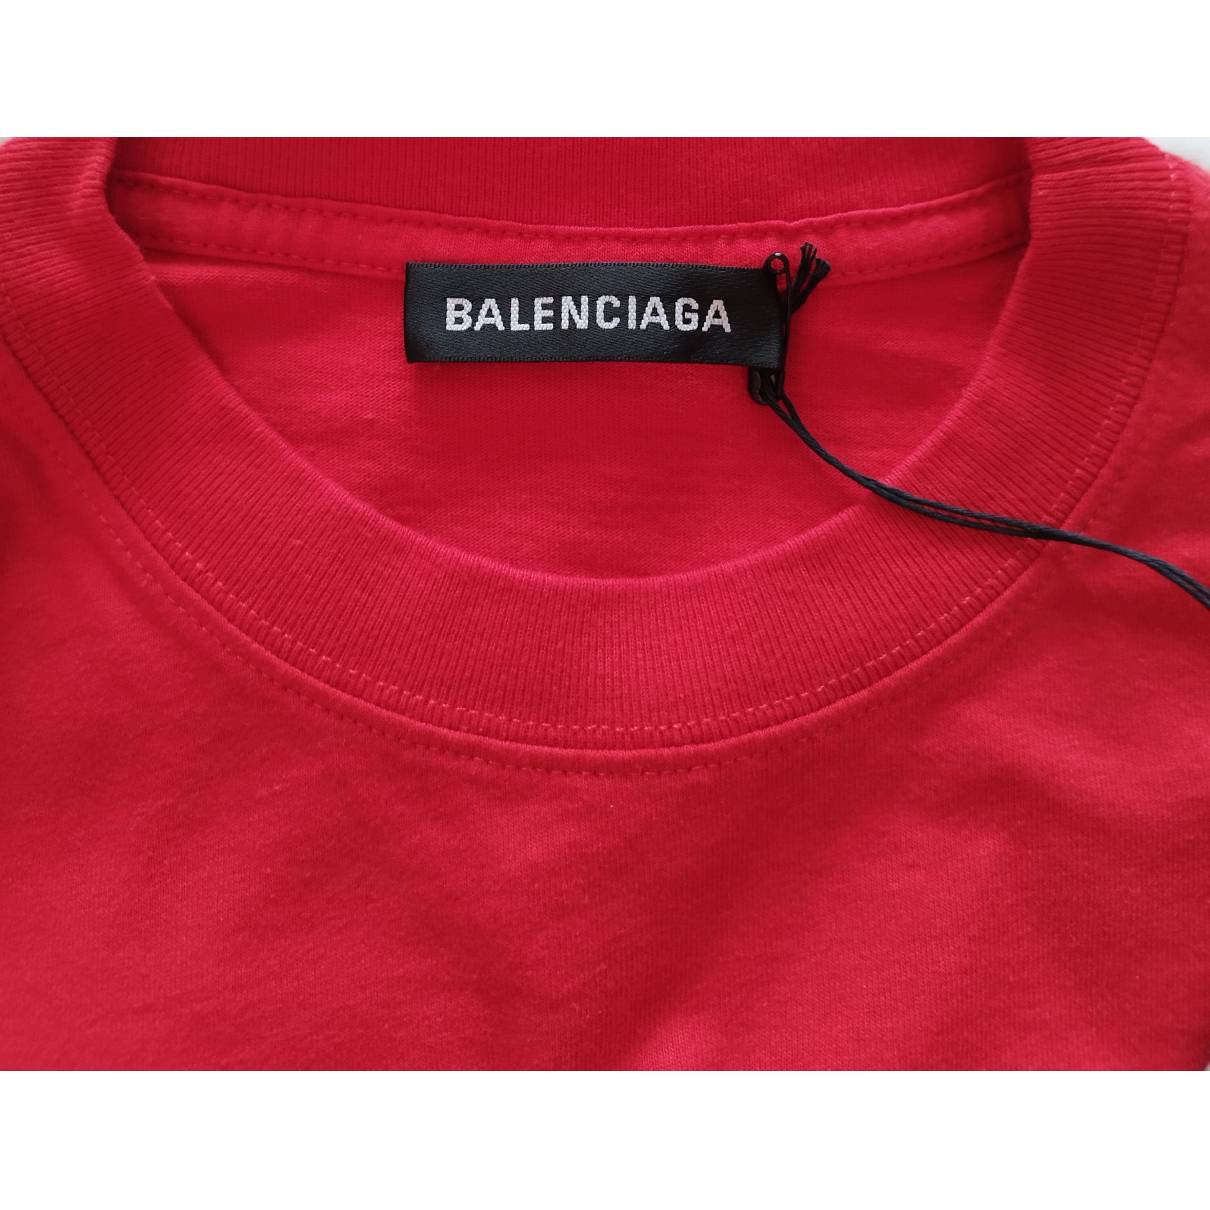 T-shirt Balenciaga Red size S International in Cotton 31544272